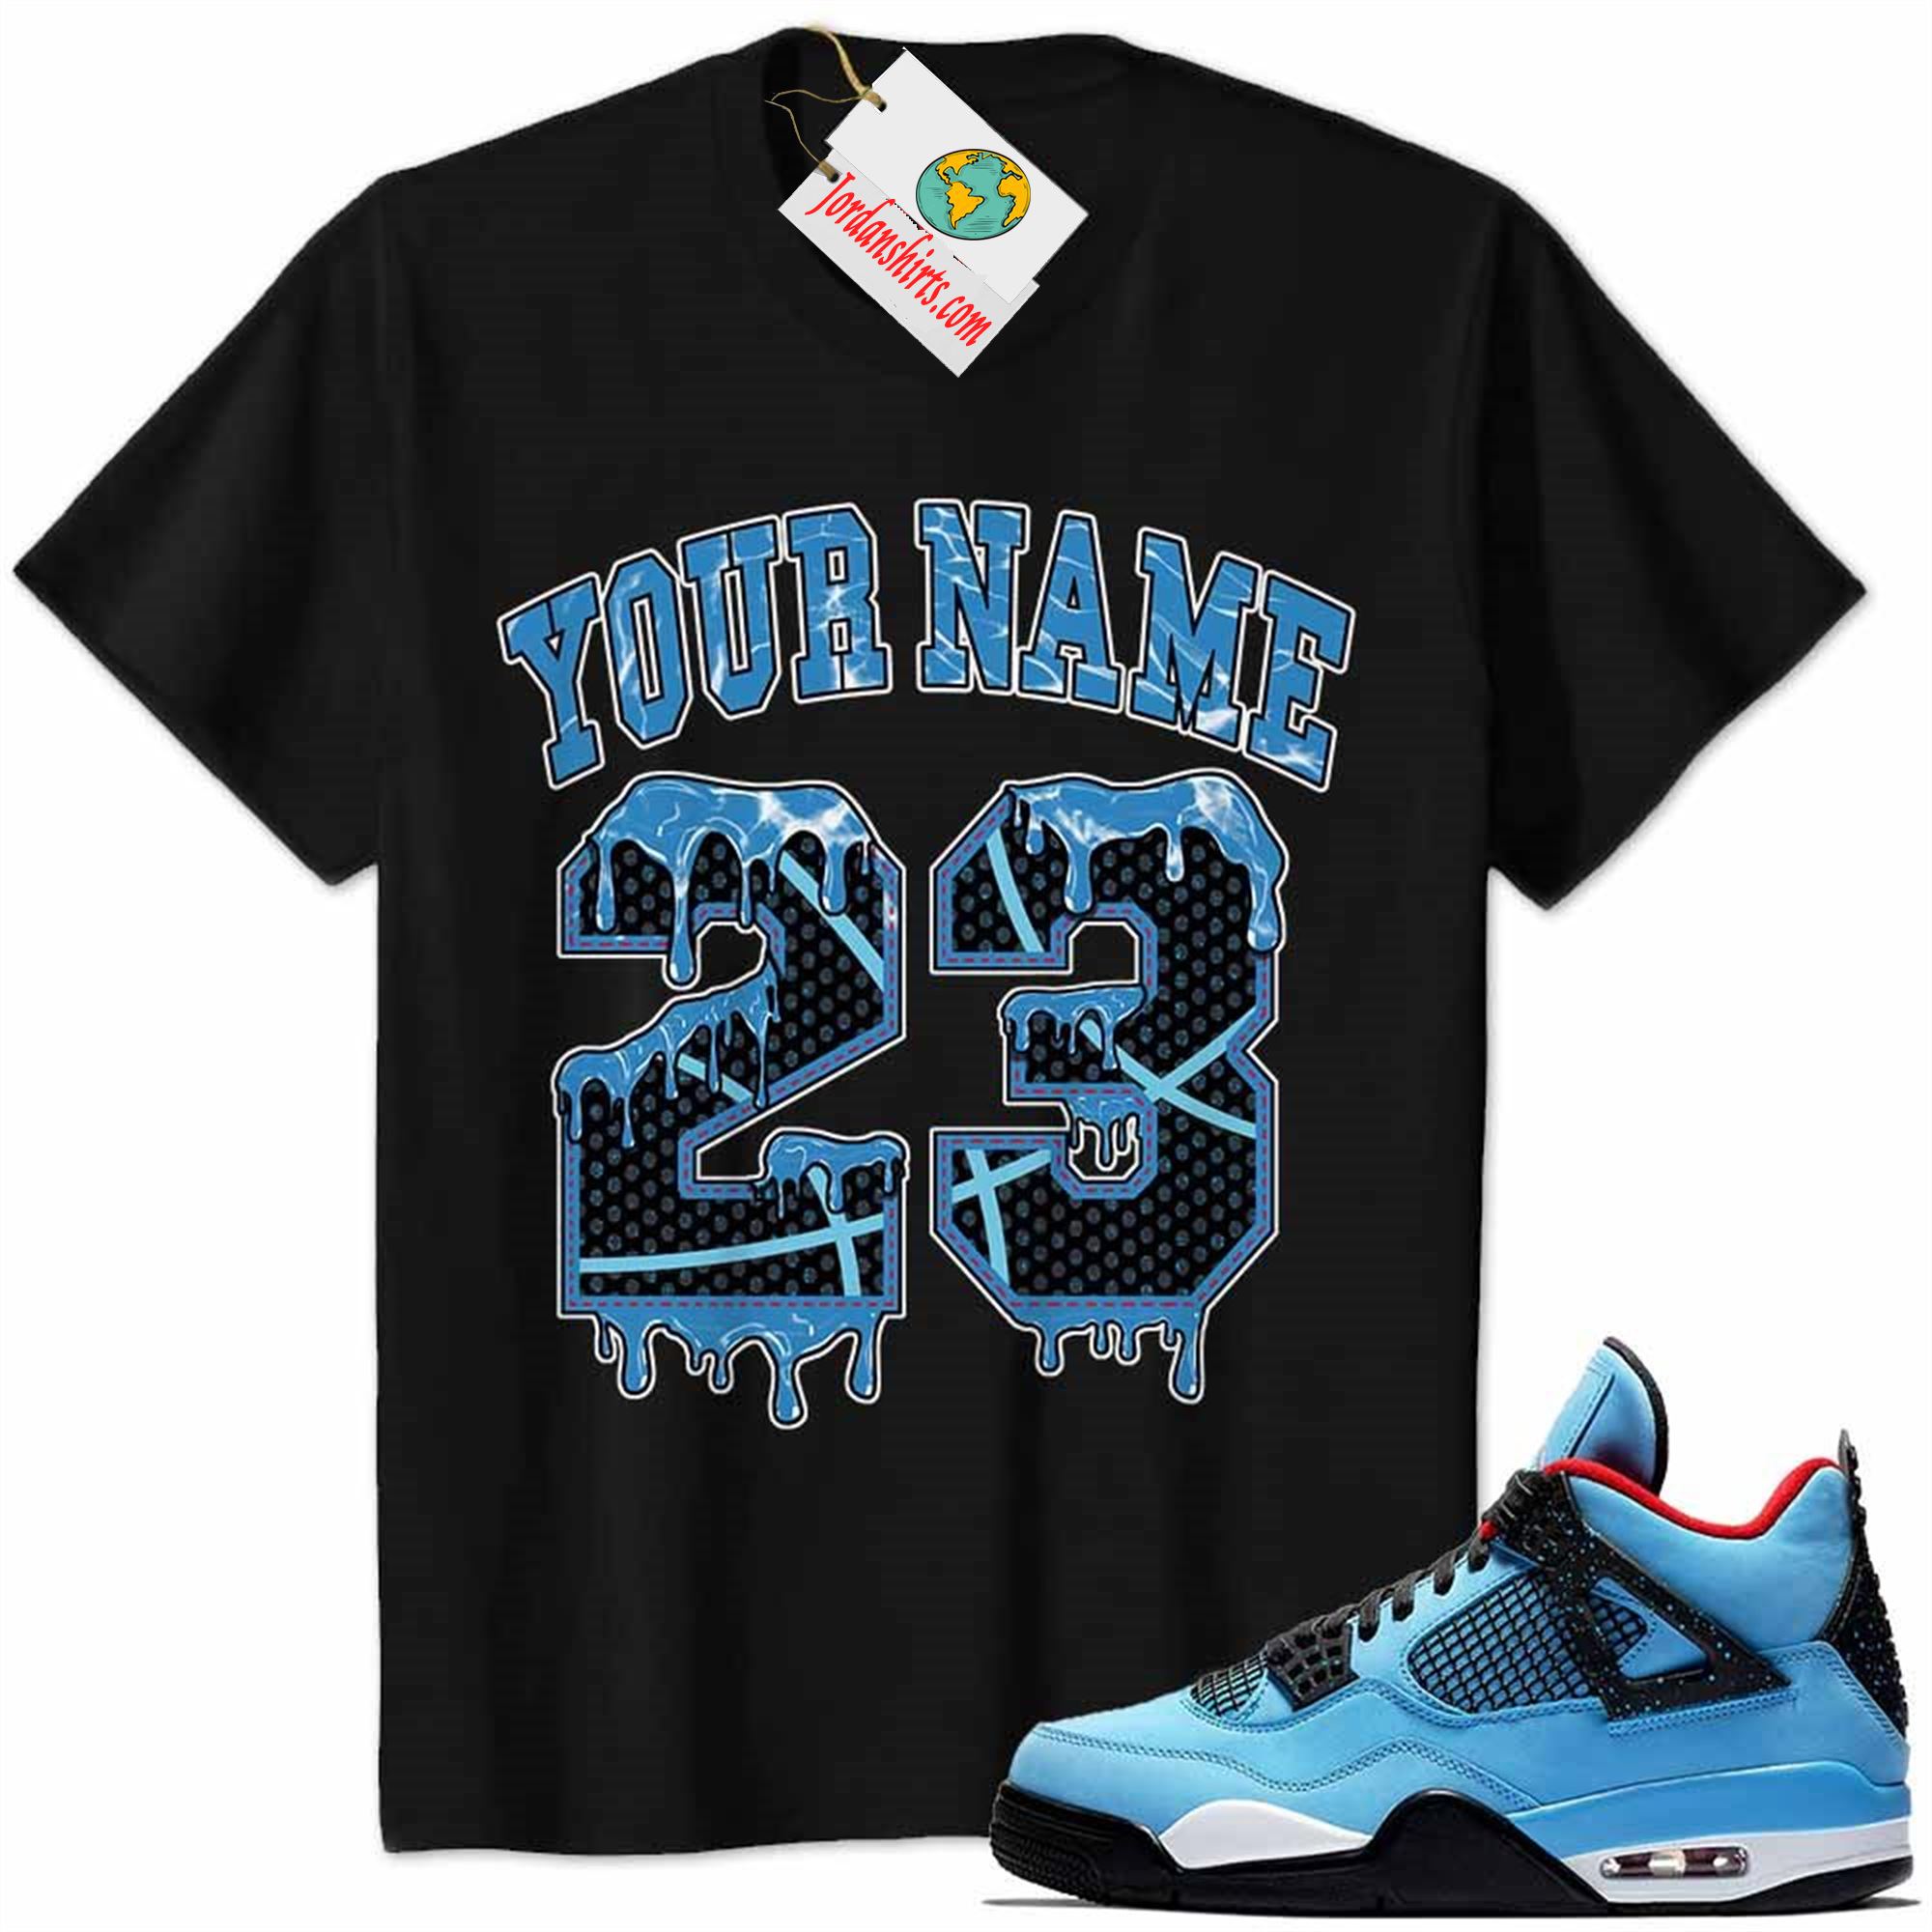 Jordan 4 Shirt, Jordan 4 Cactus Jack Travis Scott Shirt Personalized No23 Drippin Black Plus Size Up To 5xl